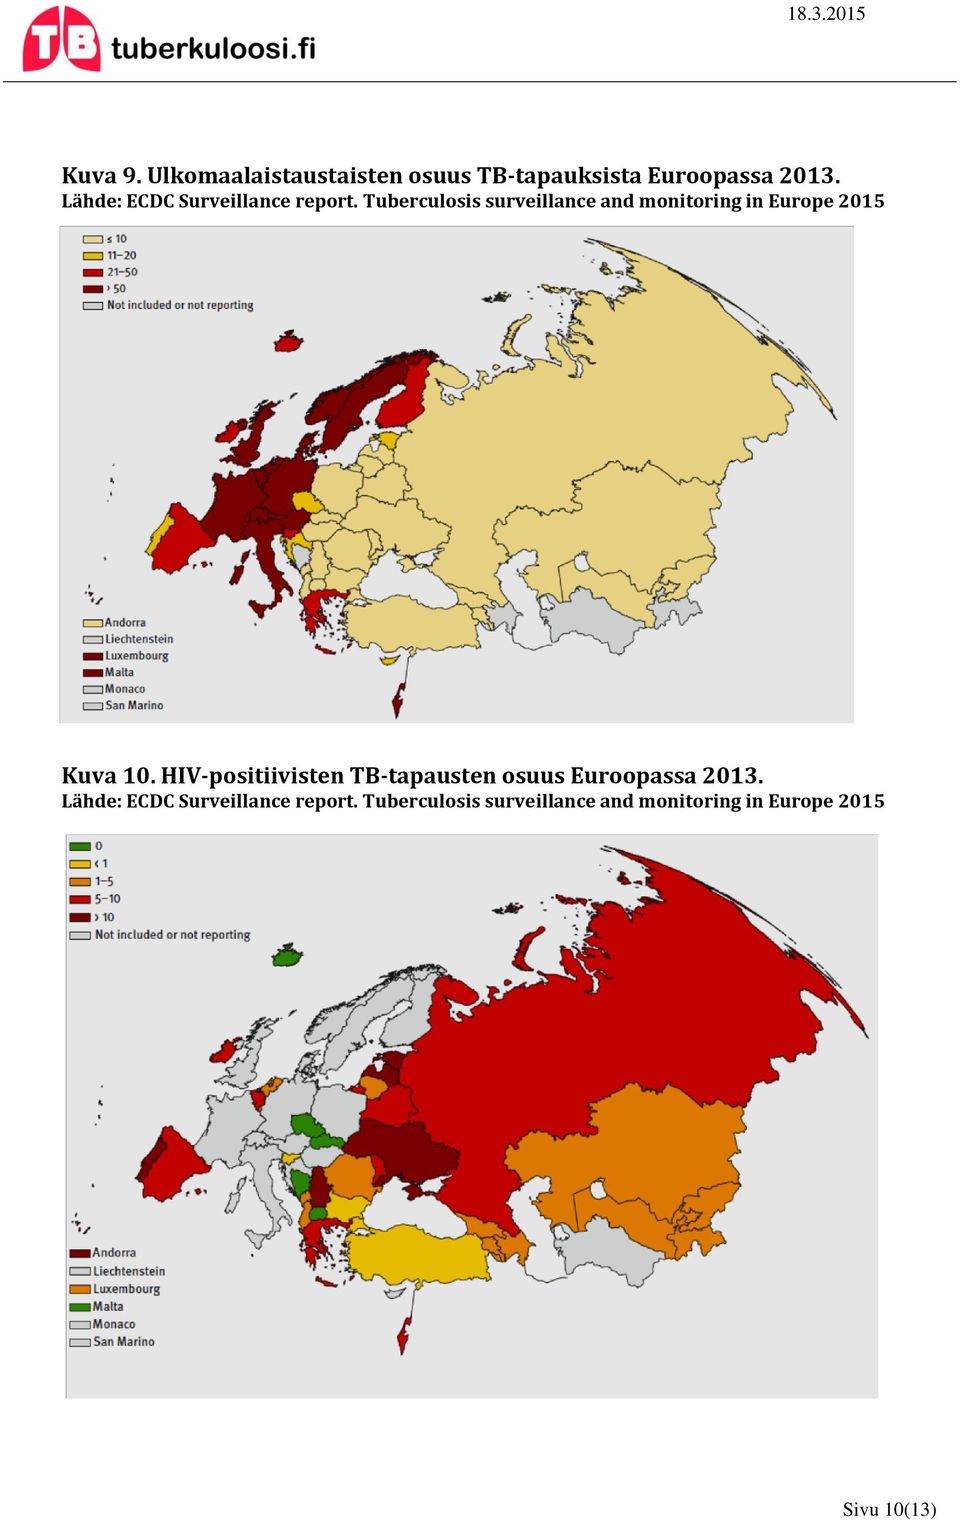 Tuberculosis surveillance and monitoring in Europe 2015 Kuva 10.